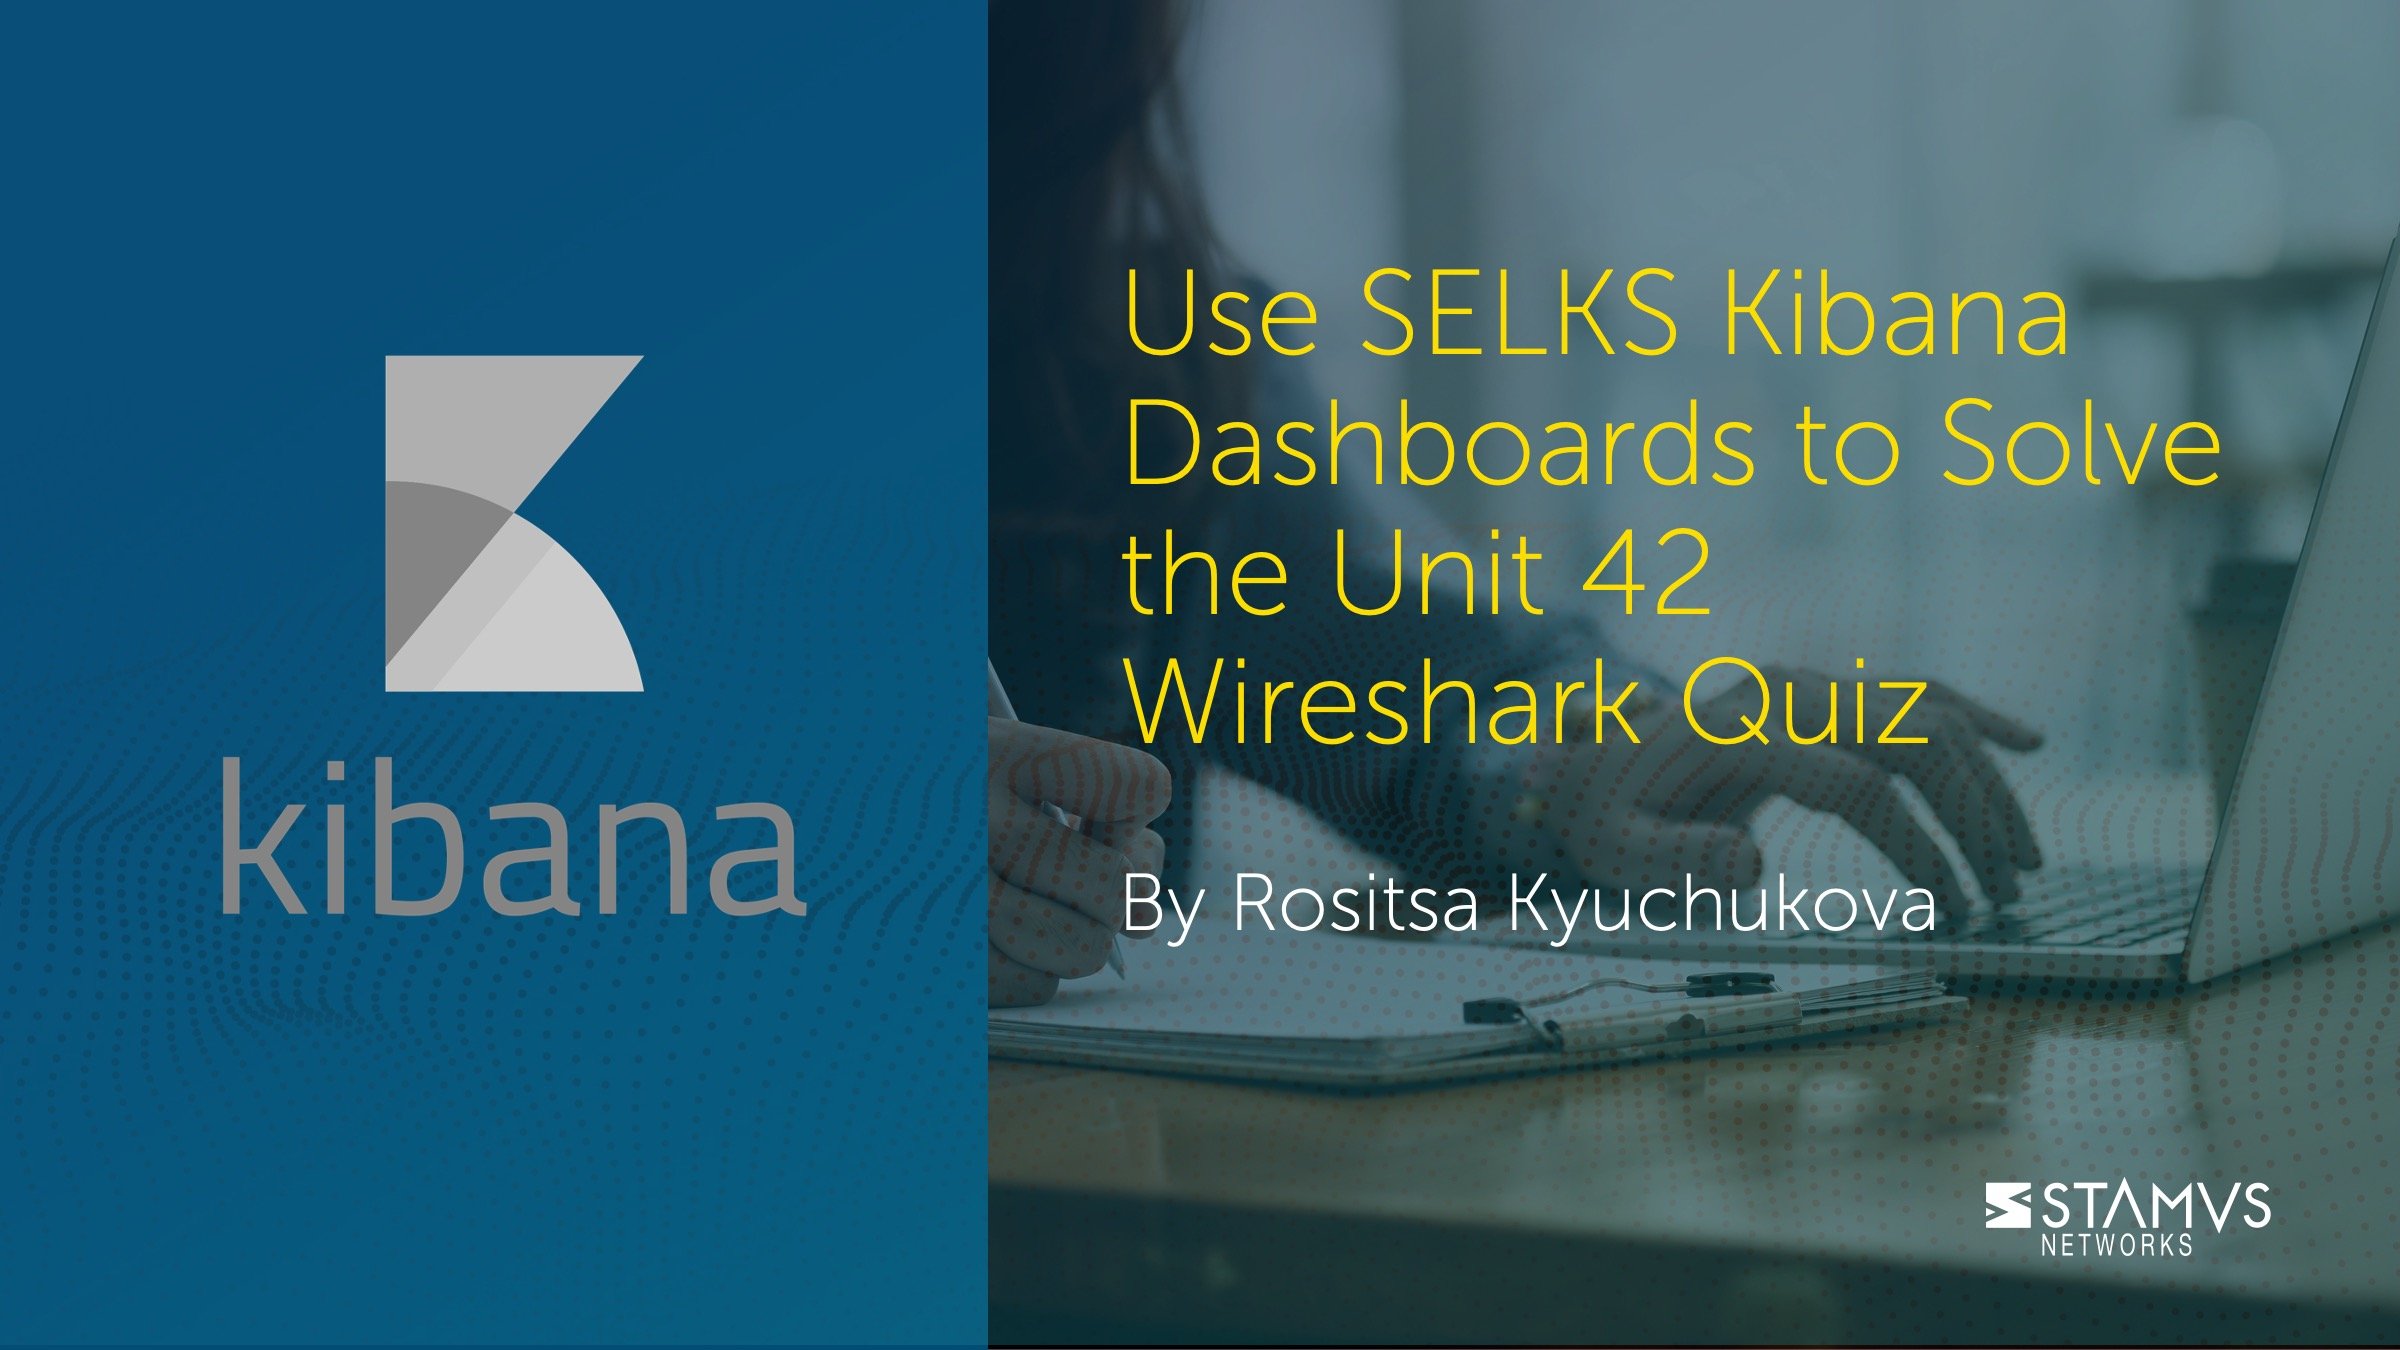 Use SELKS Kibana Dashboards to Solve the Unit 42 Wireshark Quiz by Rosita Kyuchukova